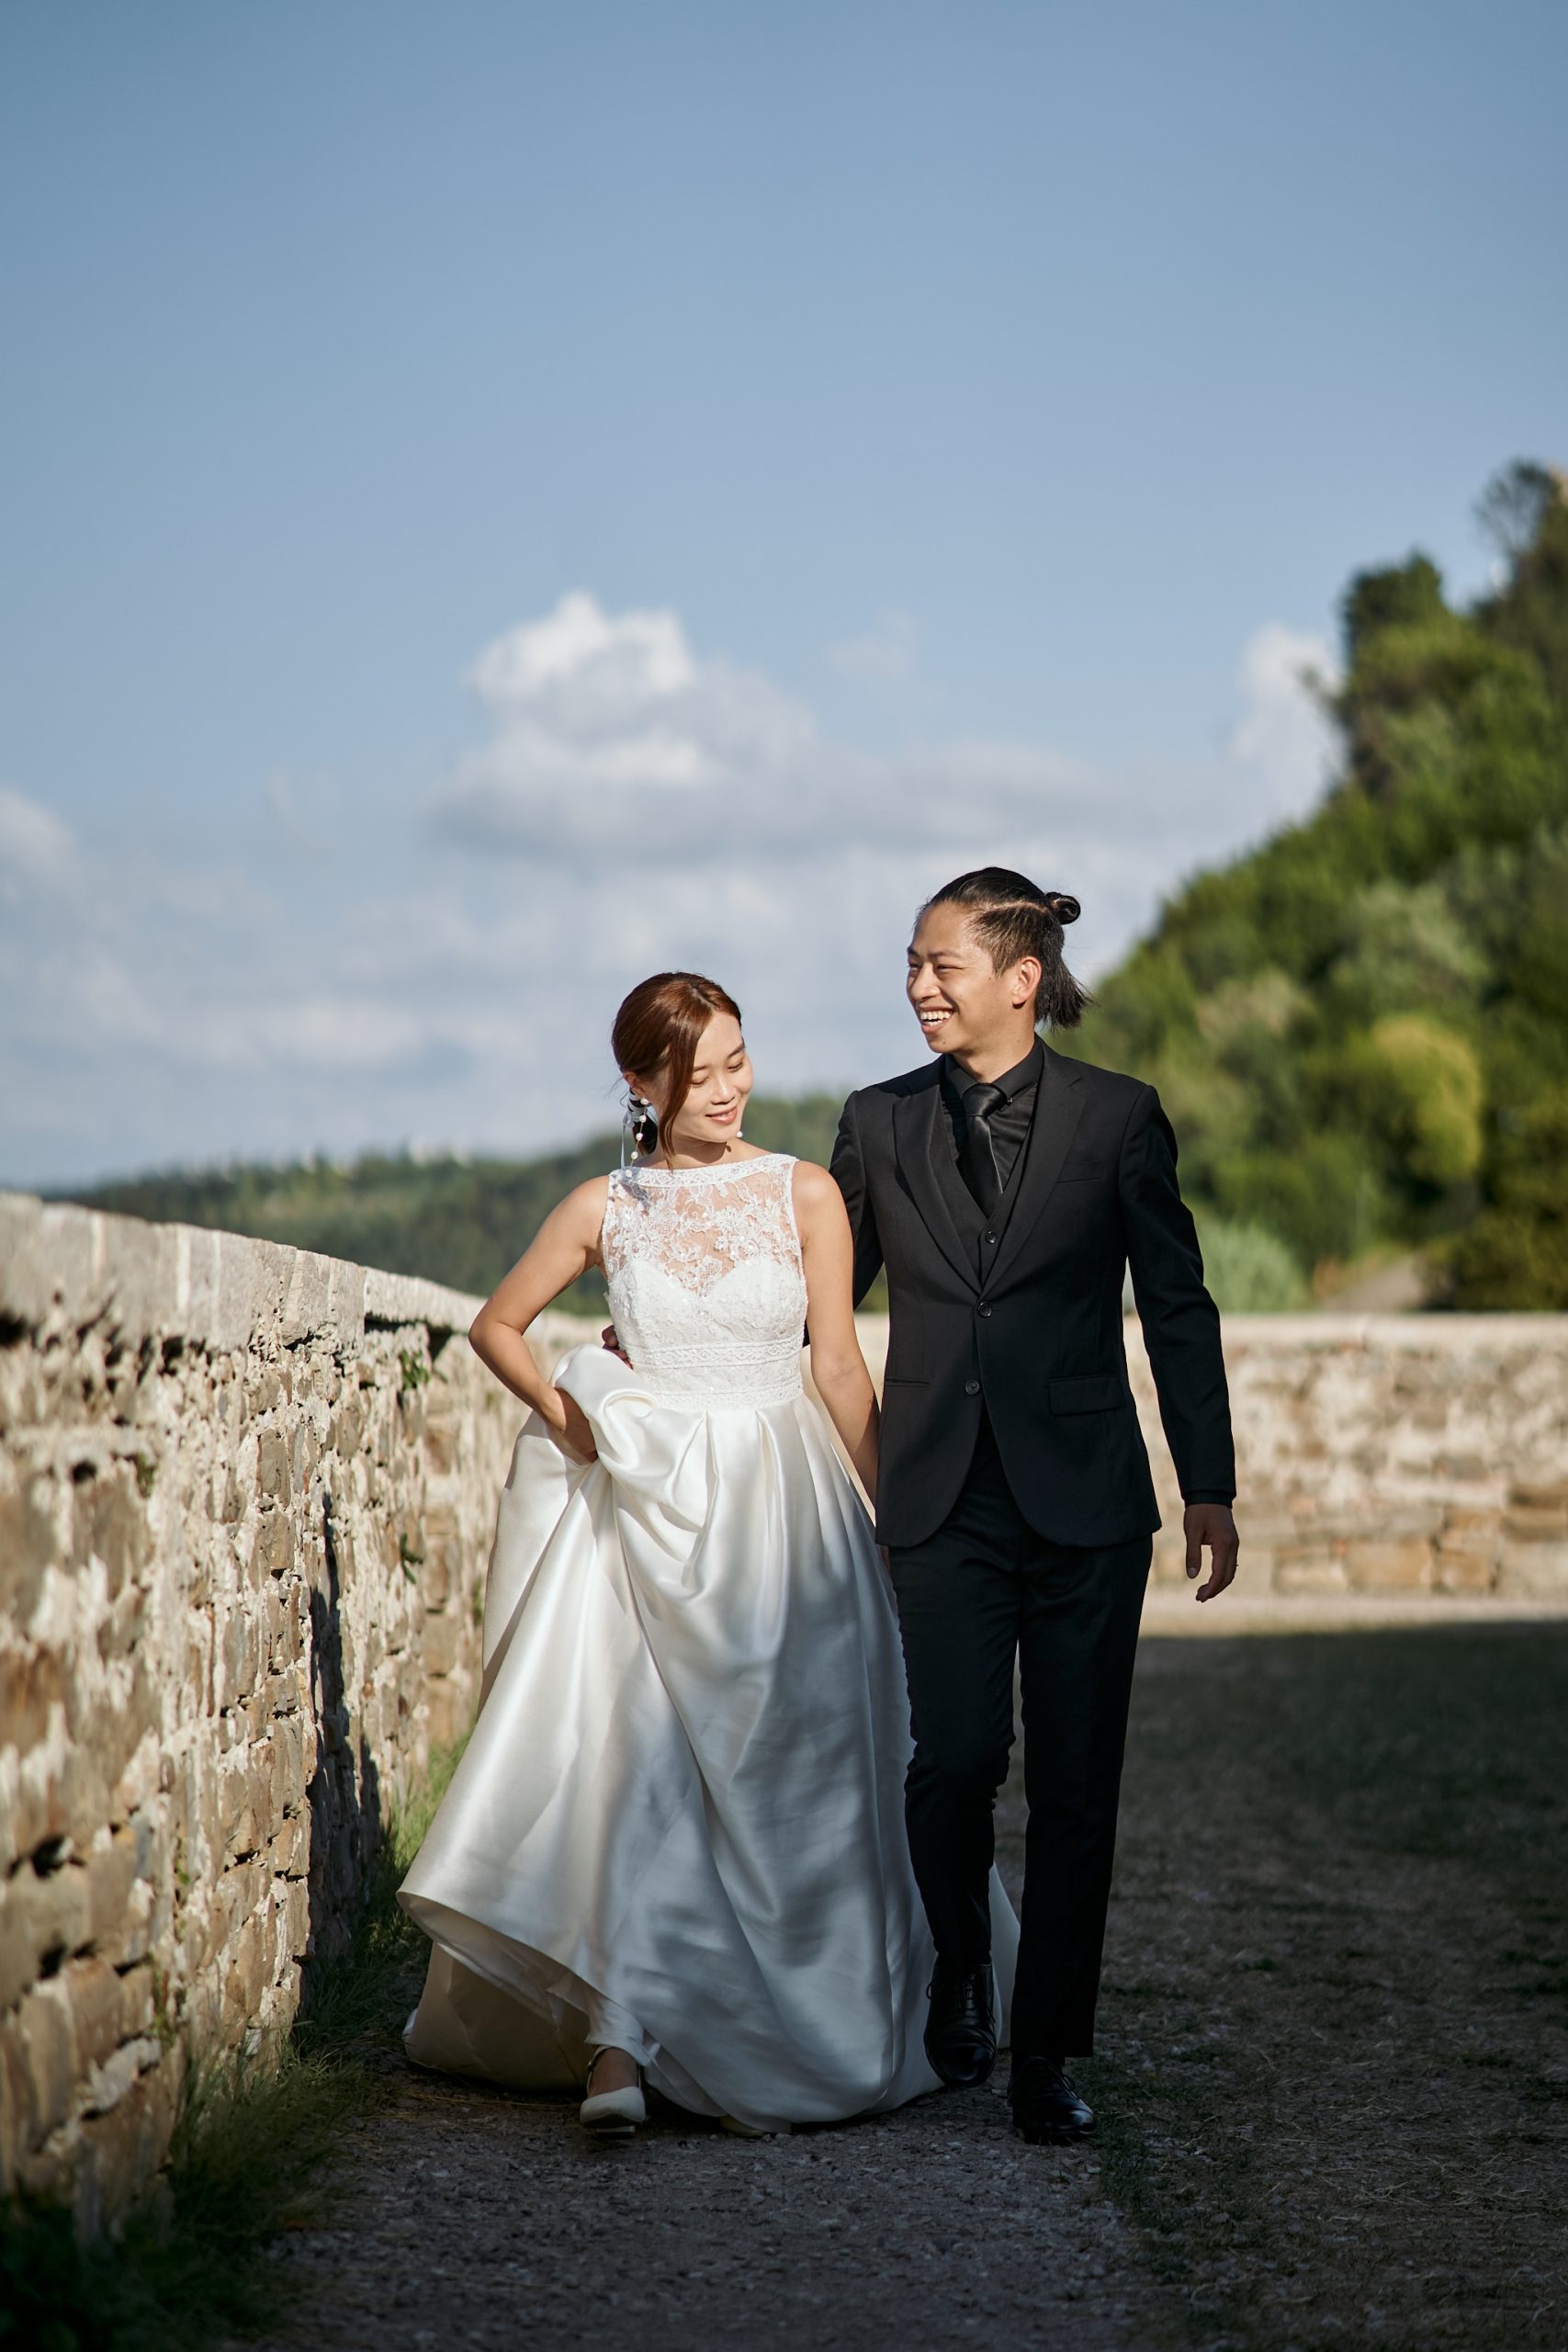 Asian wedding photographer